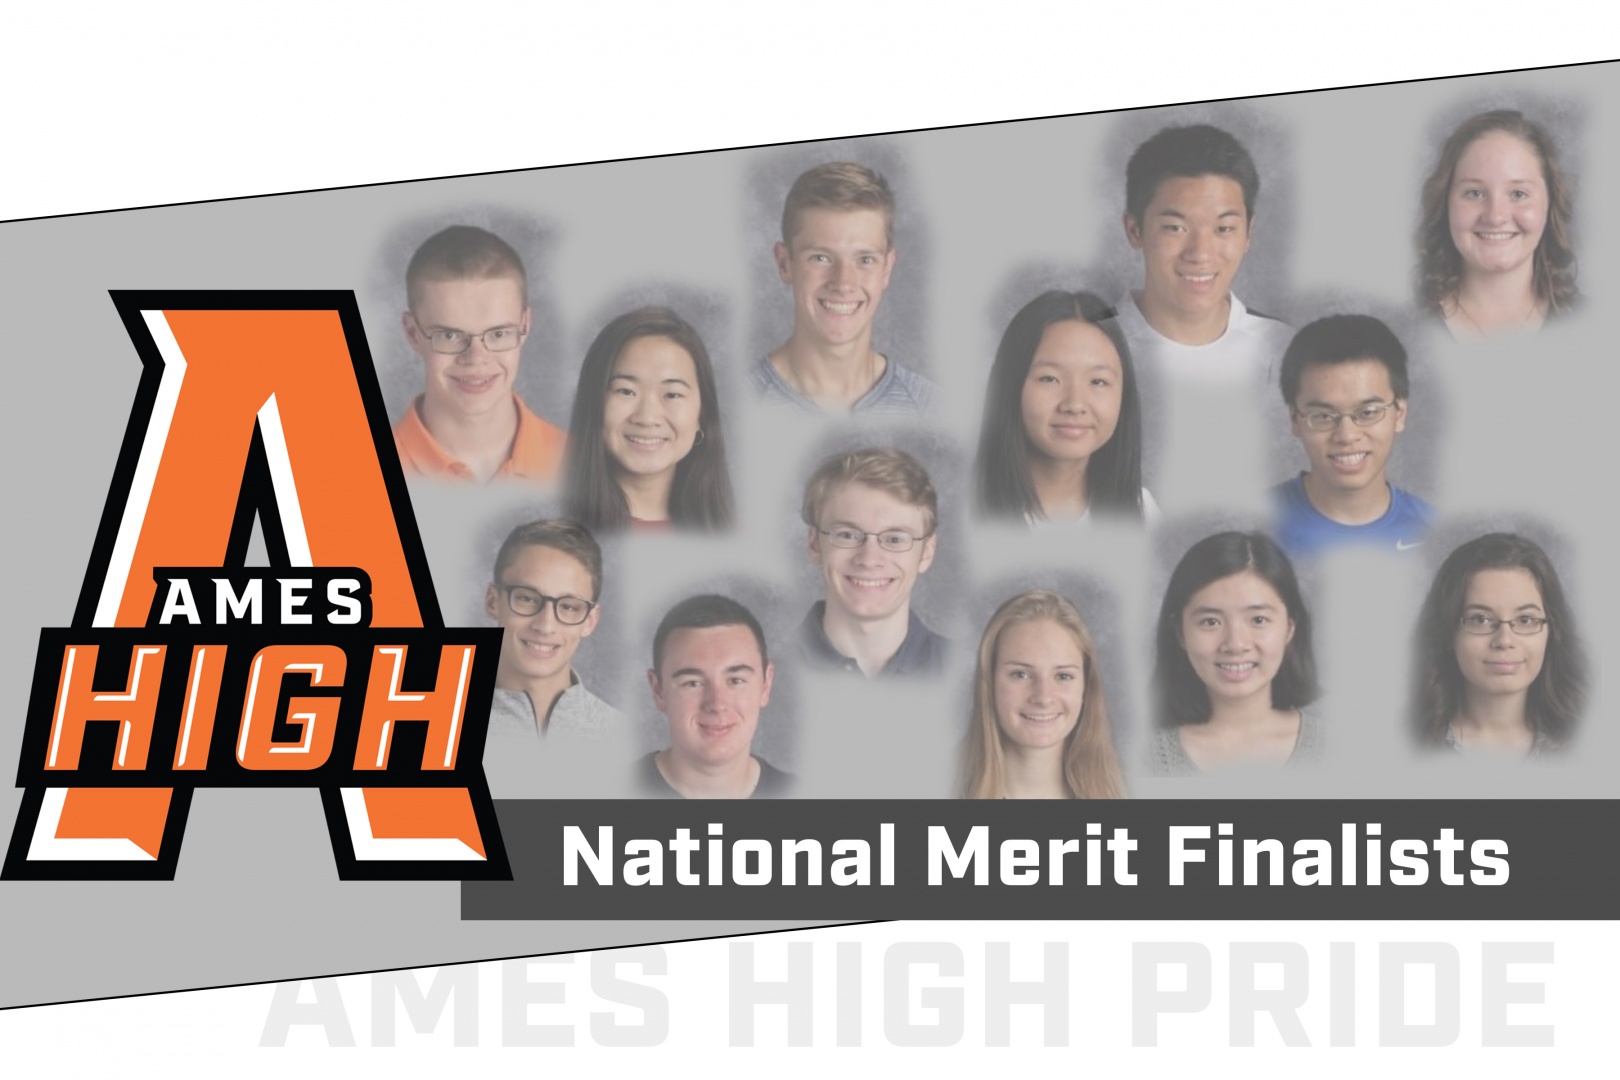 National Merit Finalists